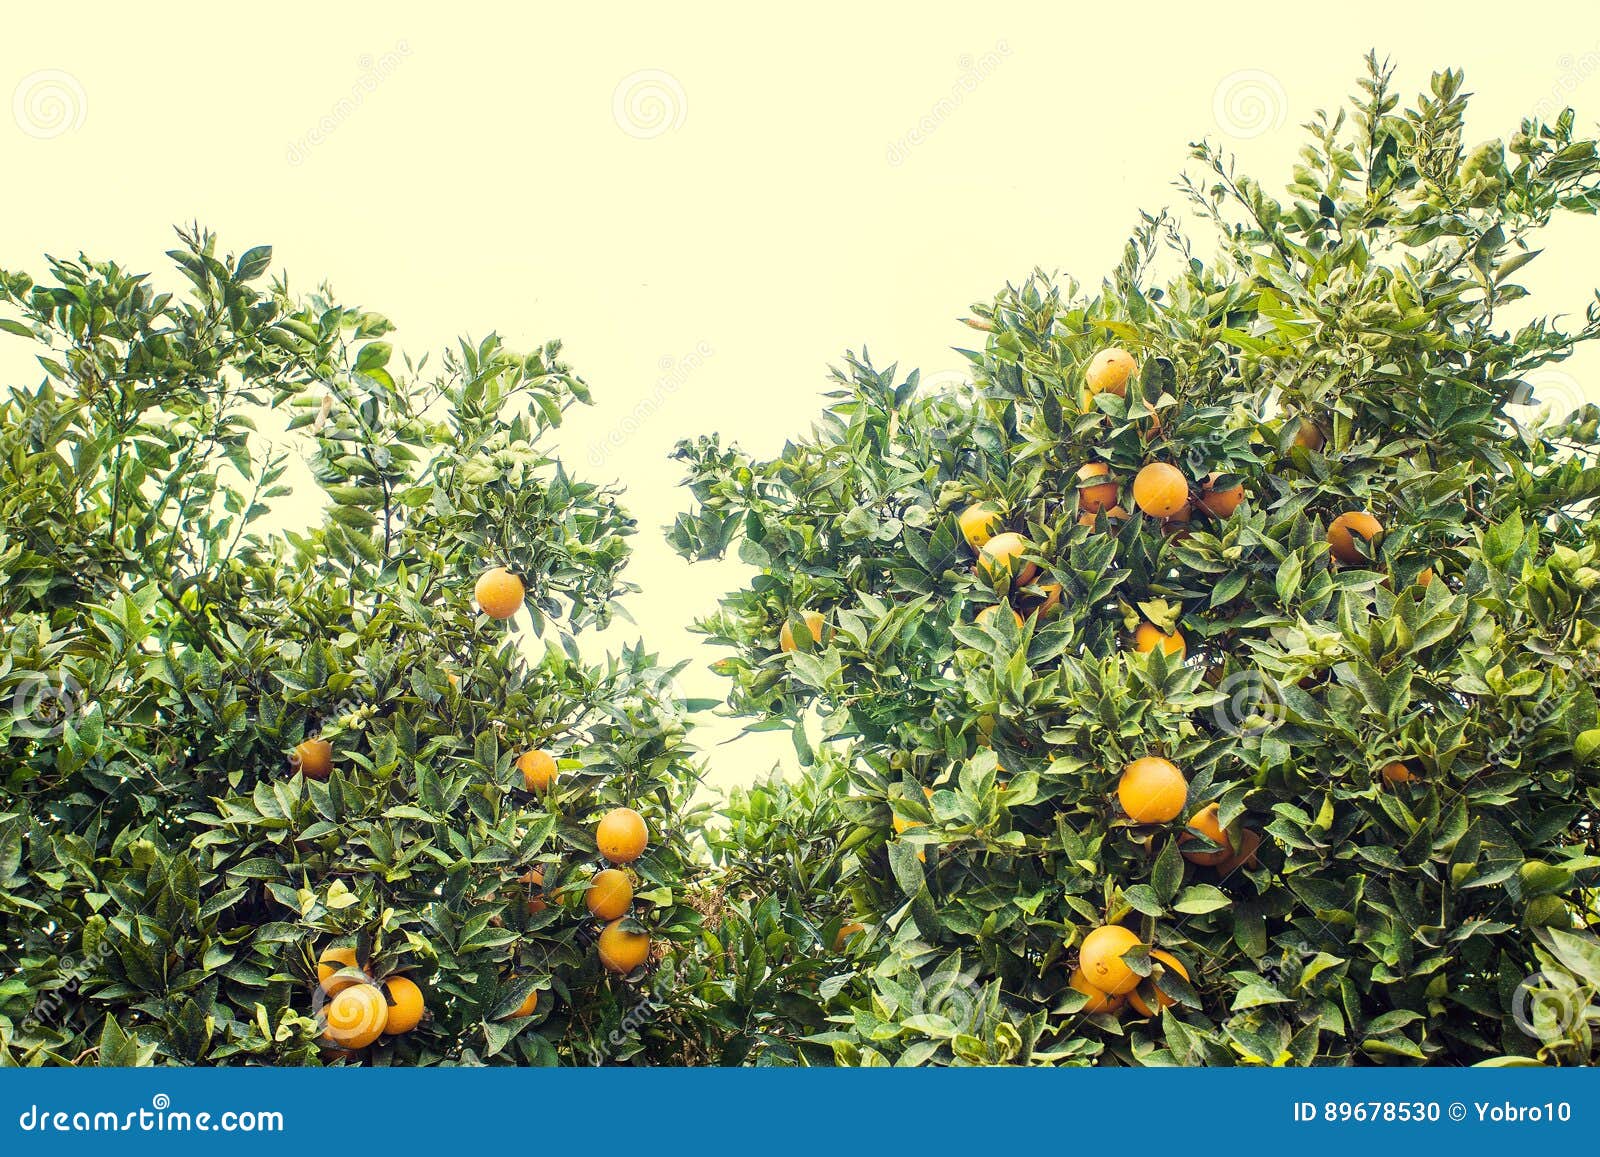 beautiful and orange grove